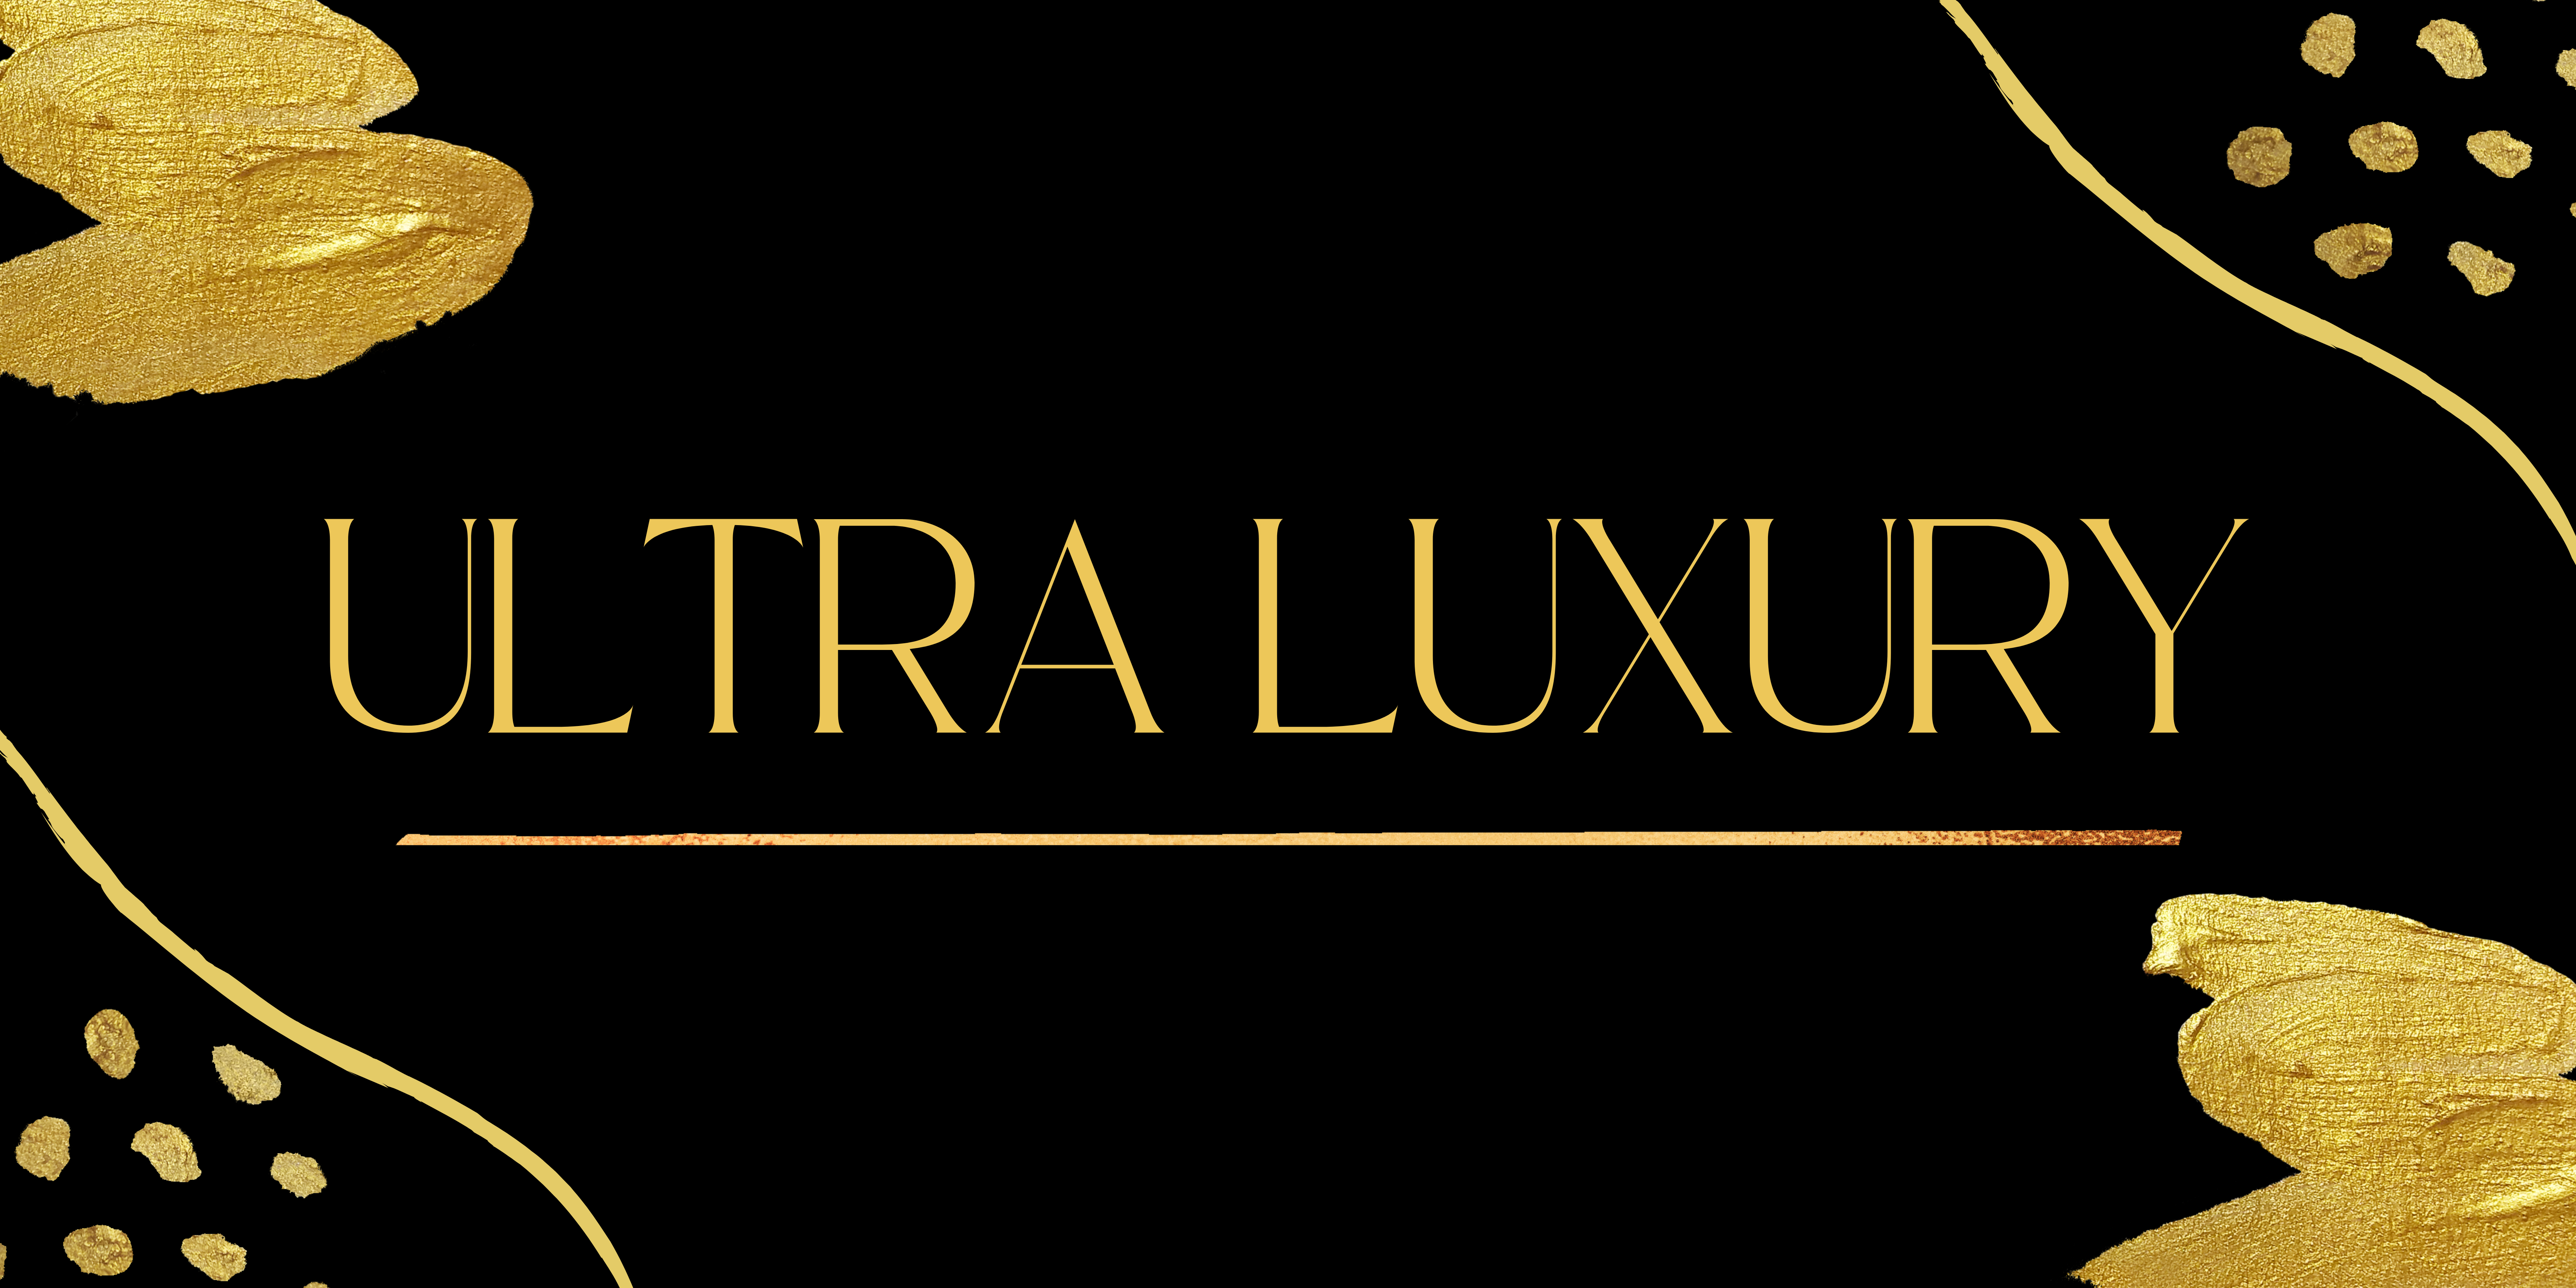 Ultra luxury (Haute Horlogerie) - PART I